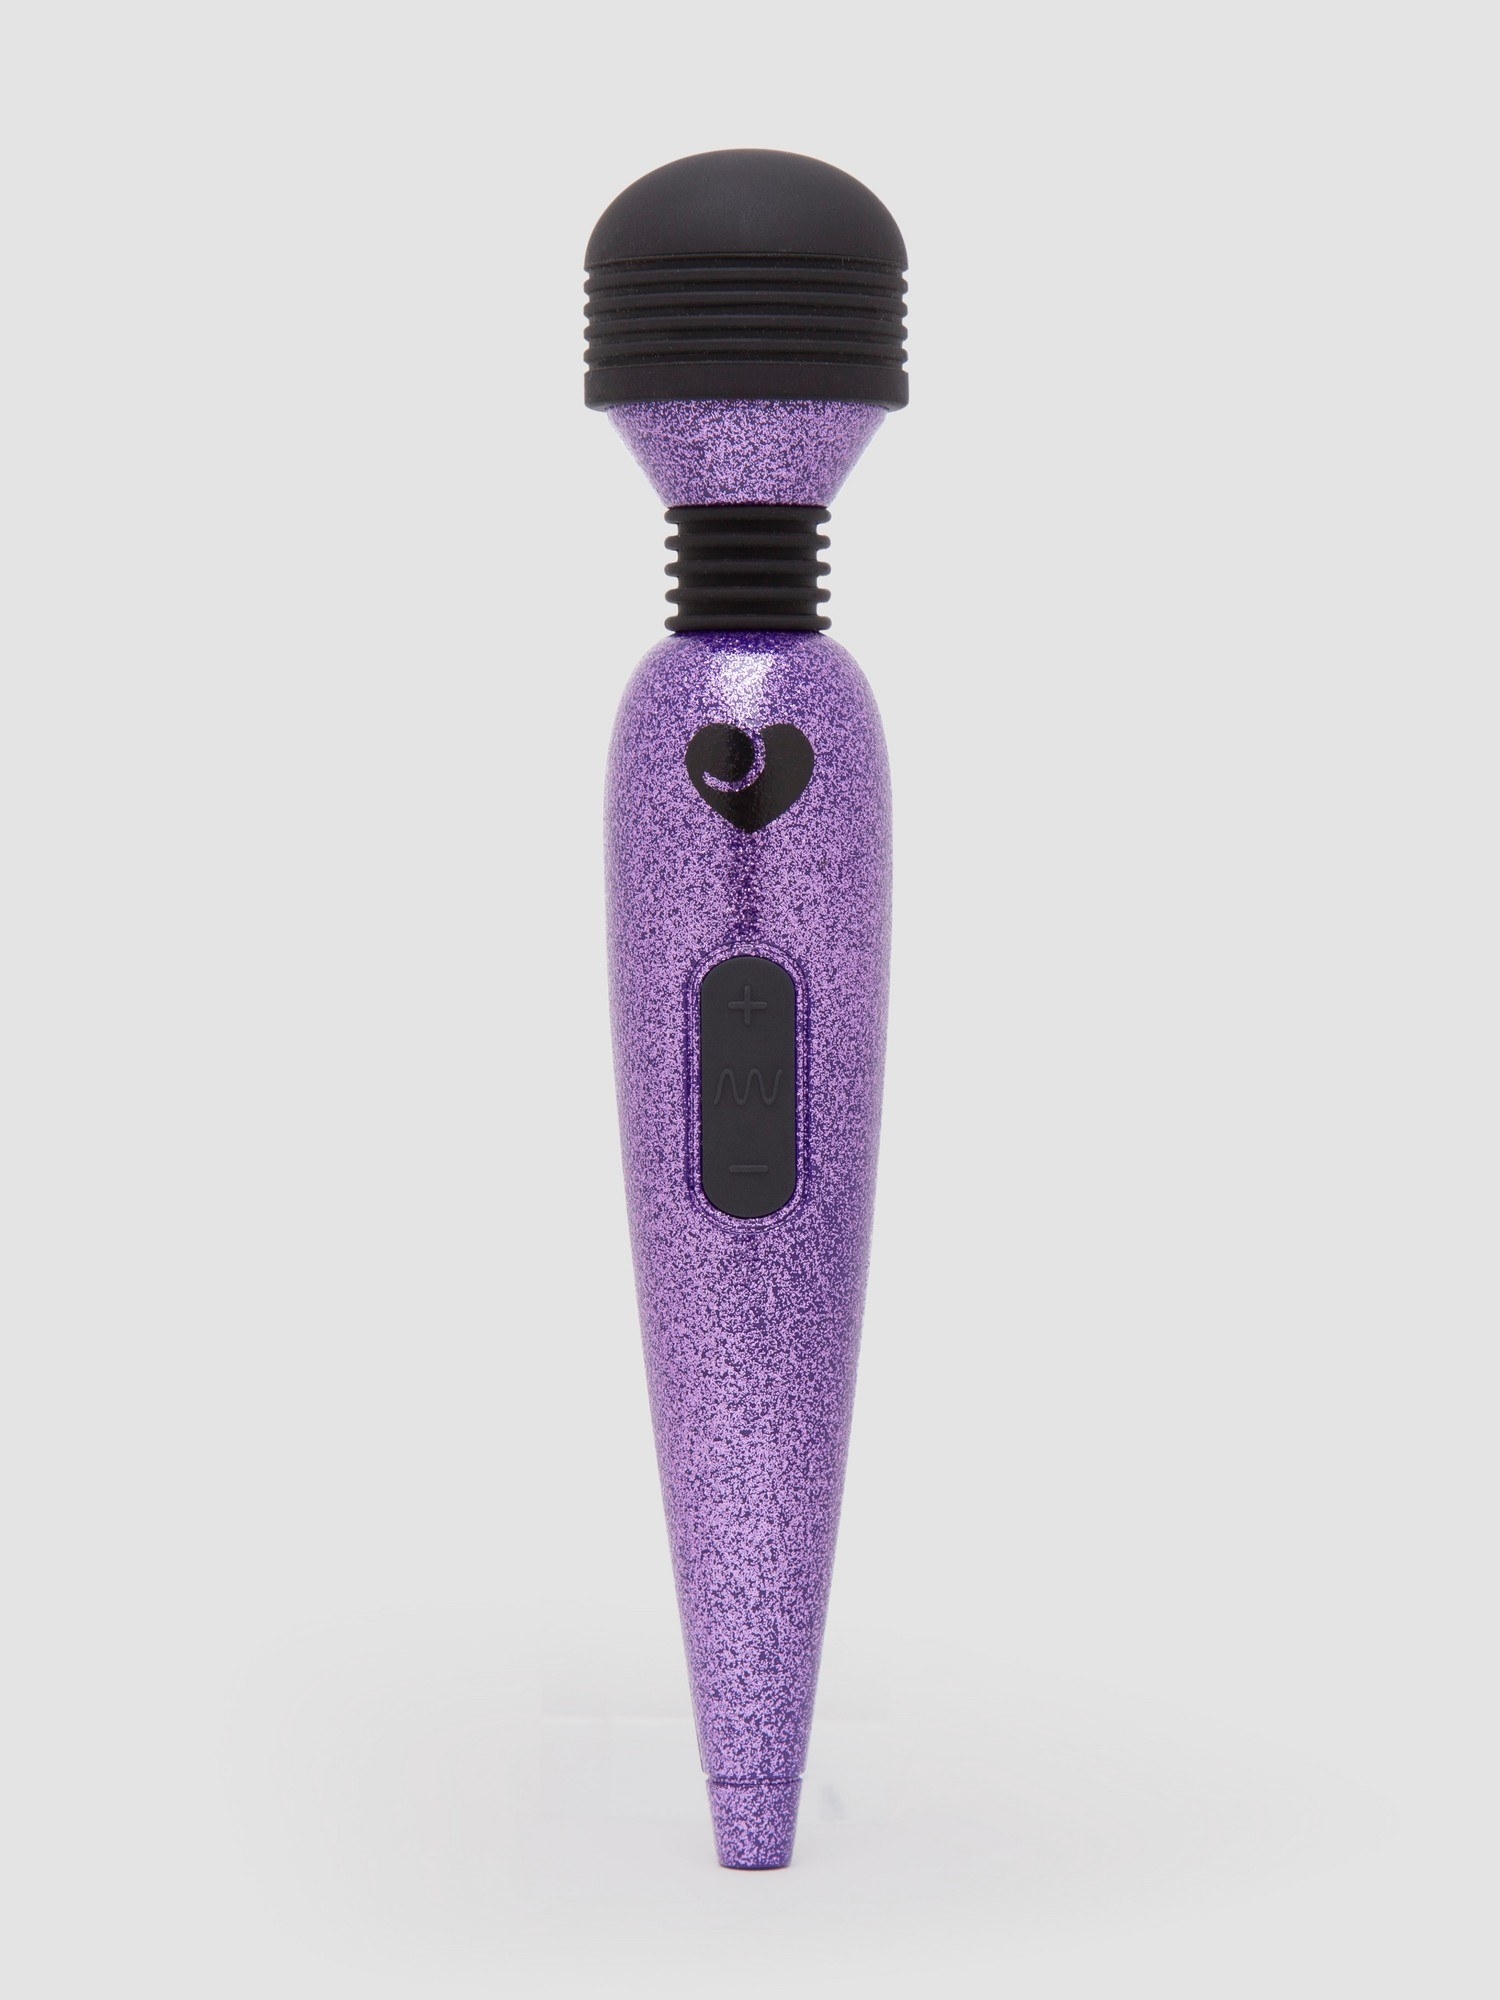 the mini glittery wand in purple